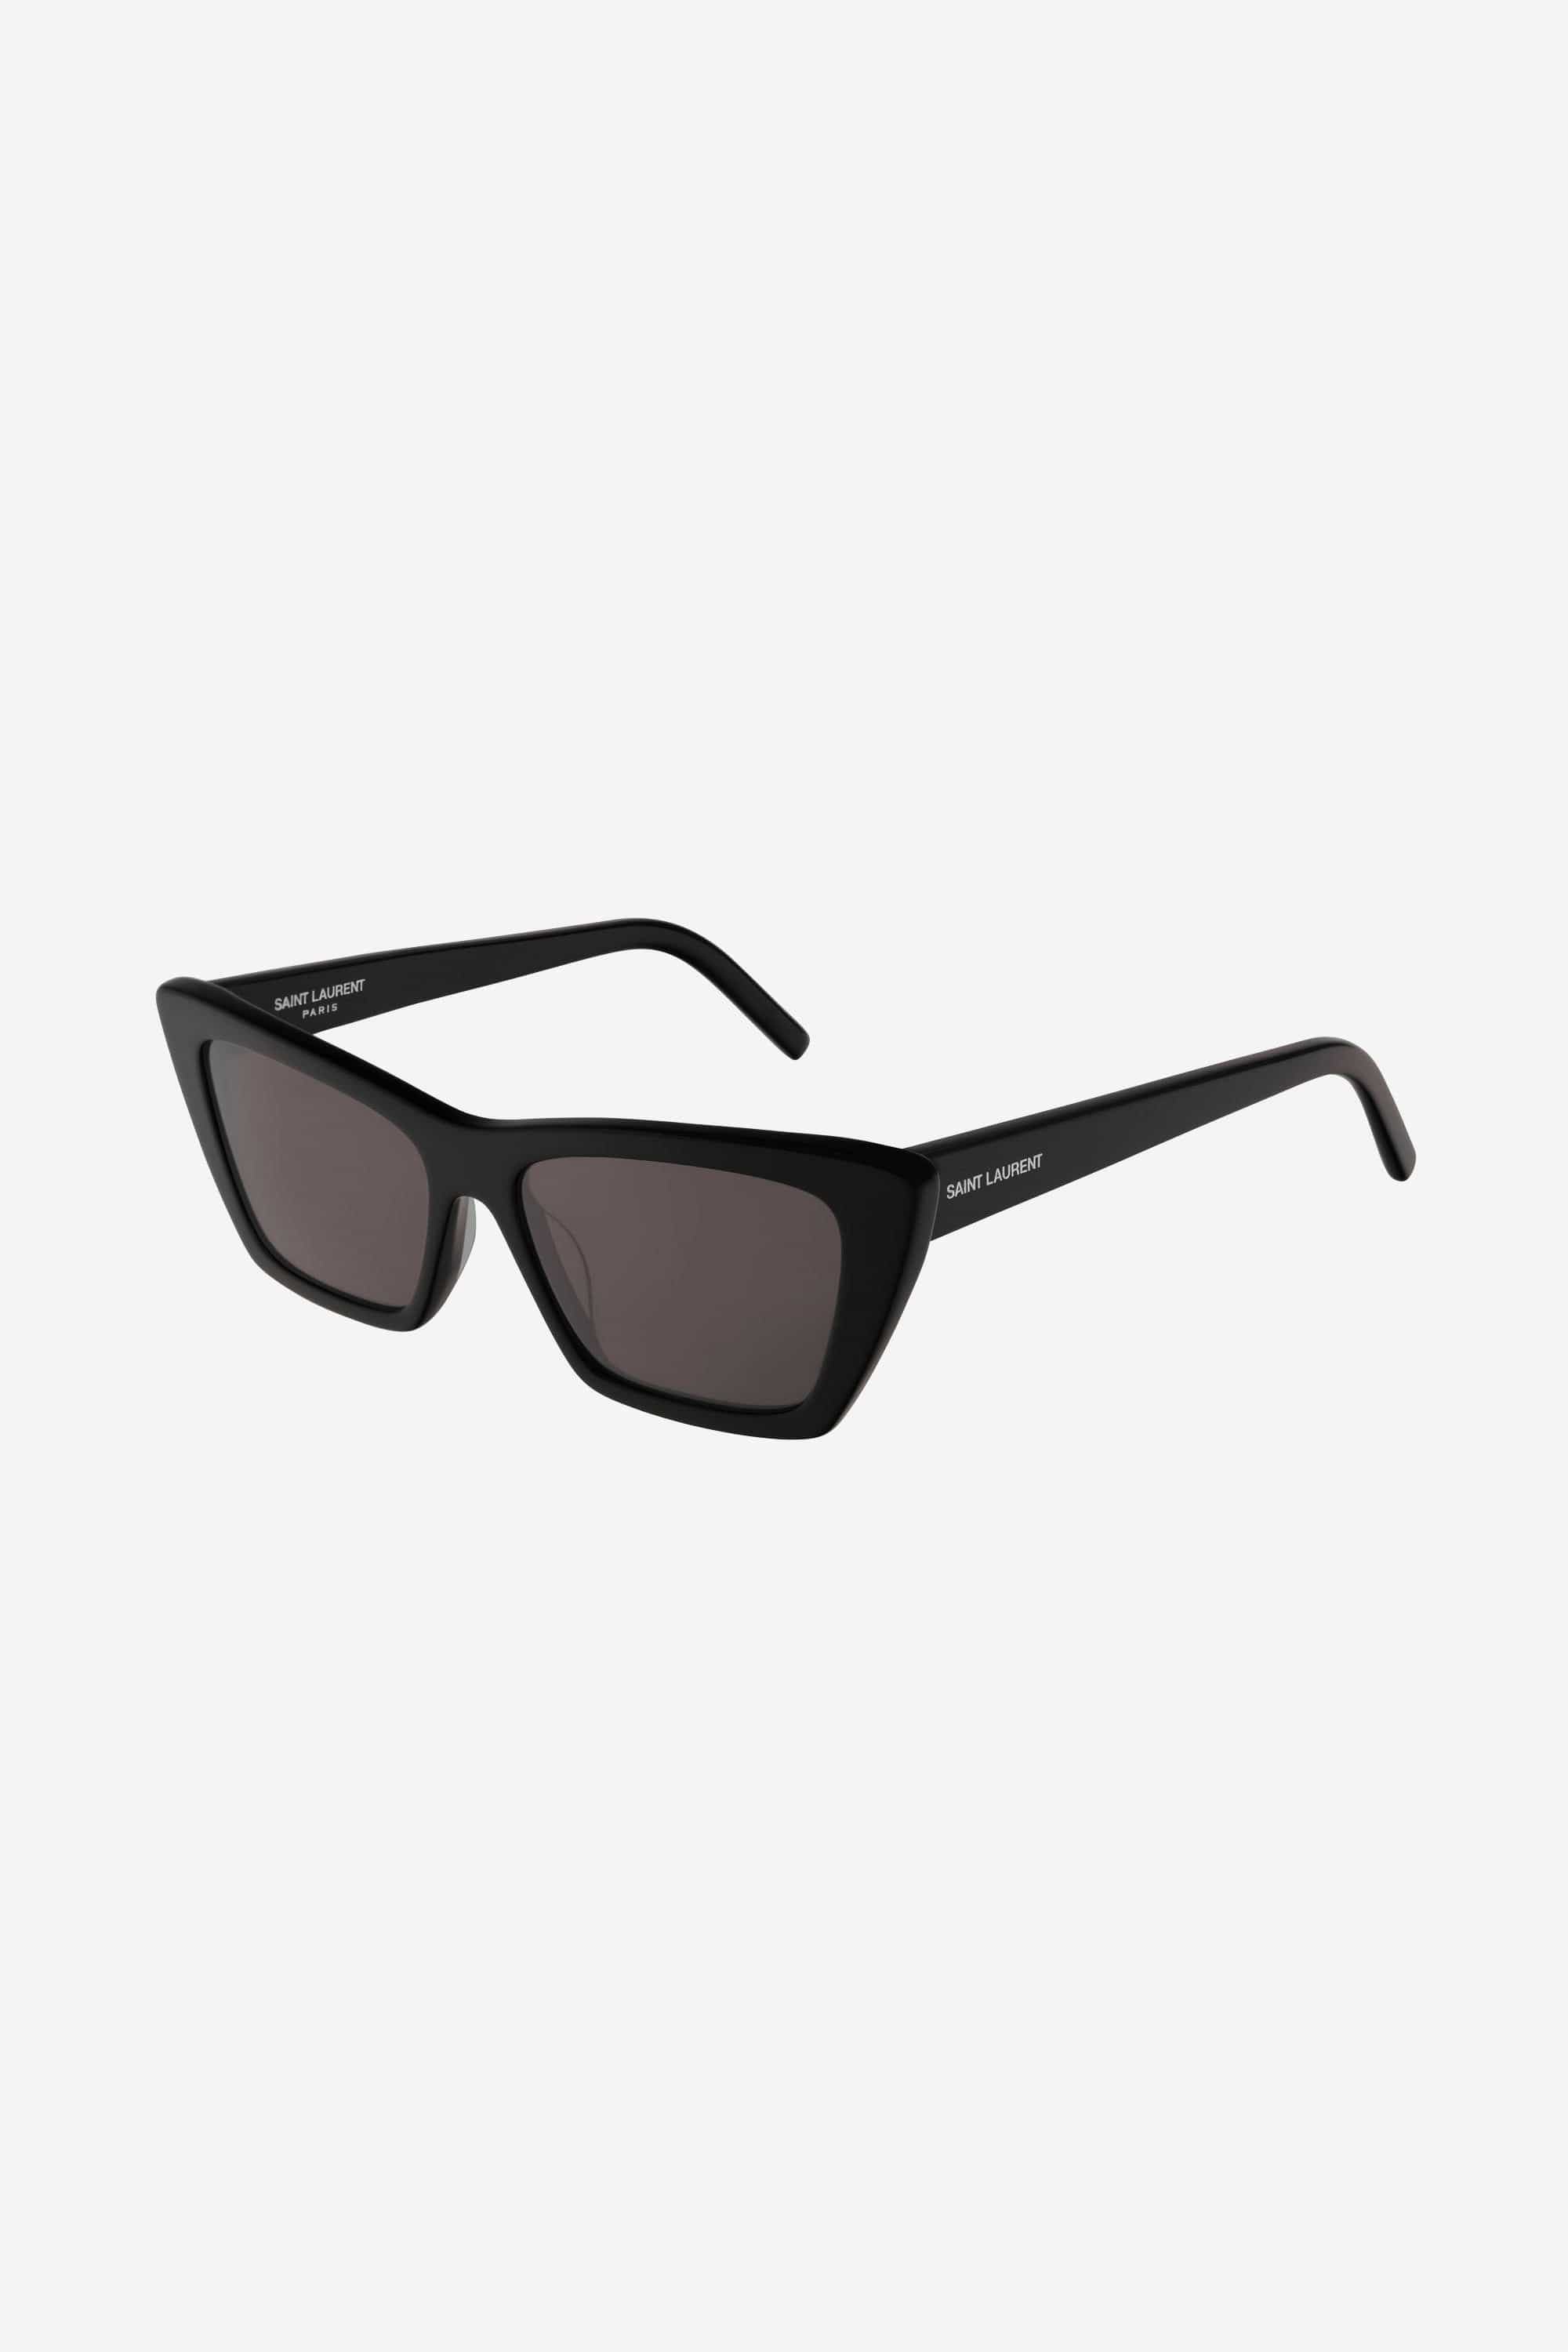 Saint Laurent iconic MICA XL sunglasses - Eyewear Club